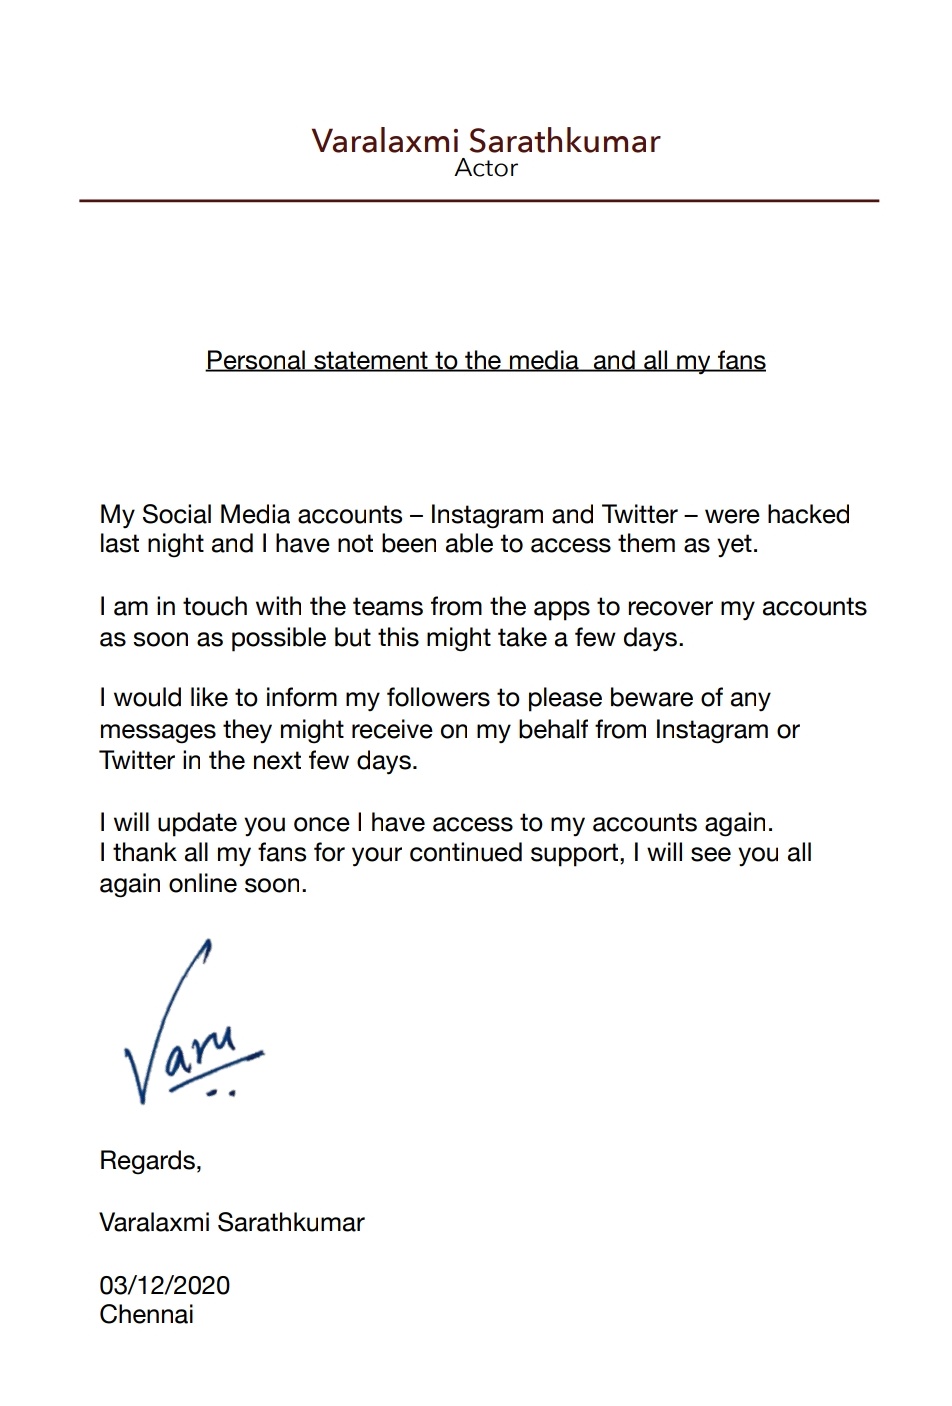 Actress Varalaxmi Sarath Kumar social media accounts hacked.